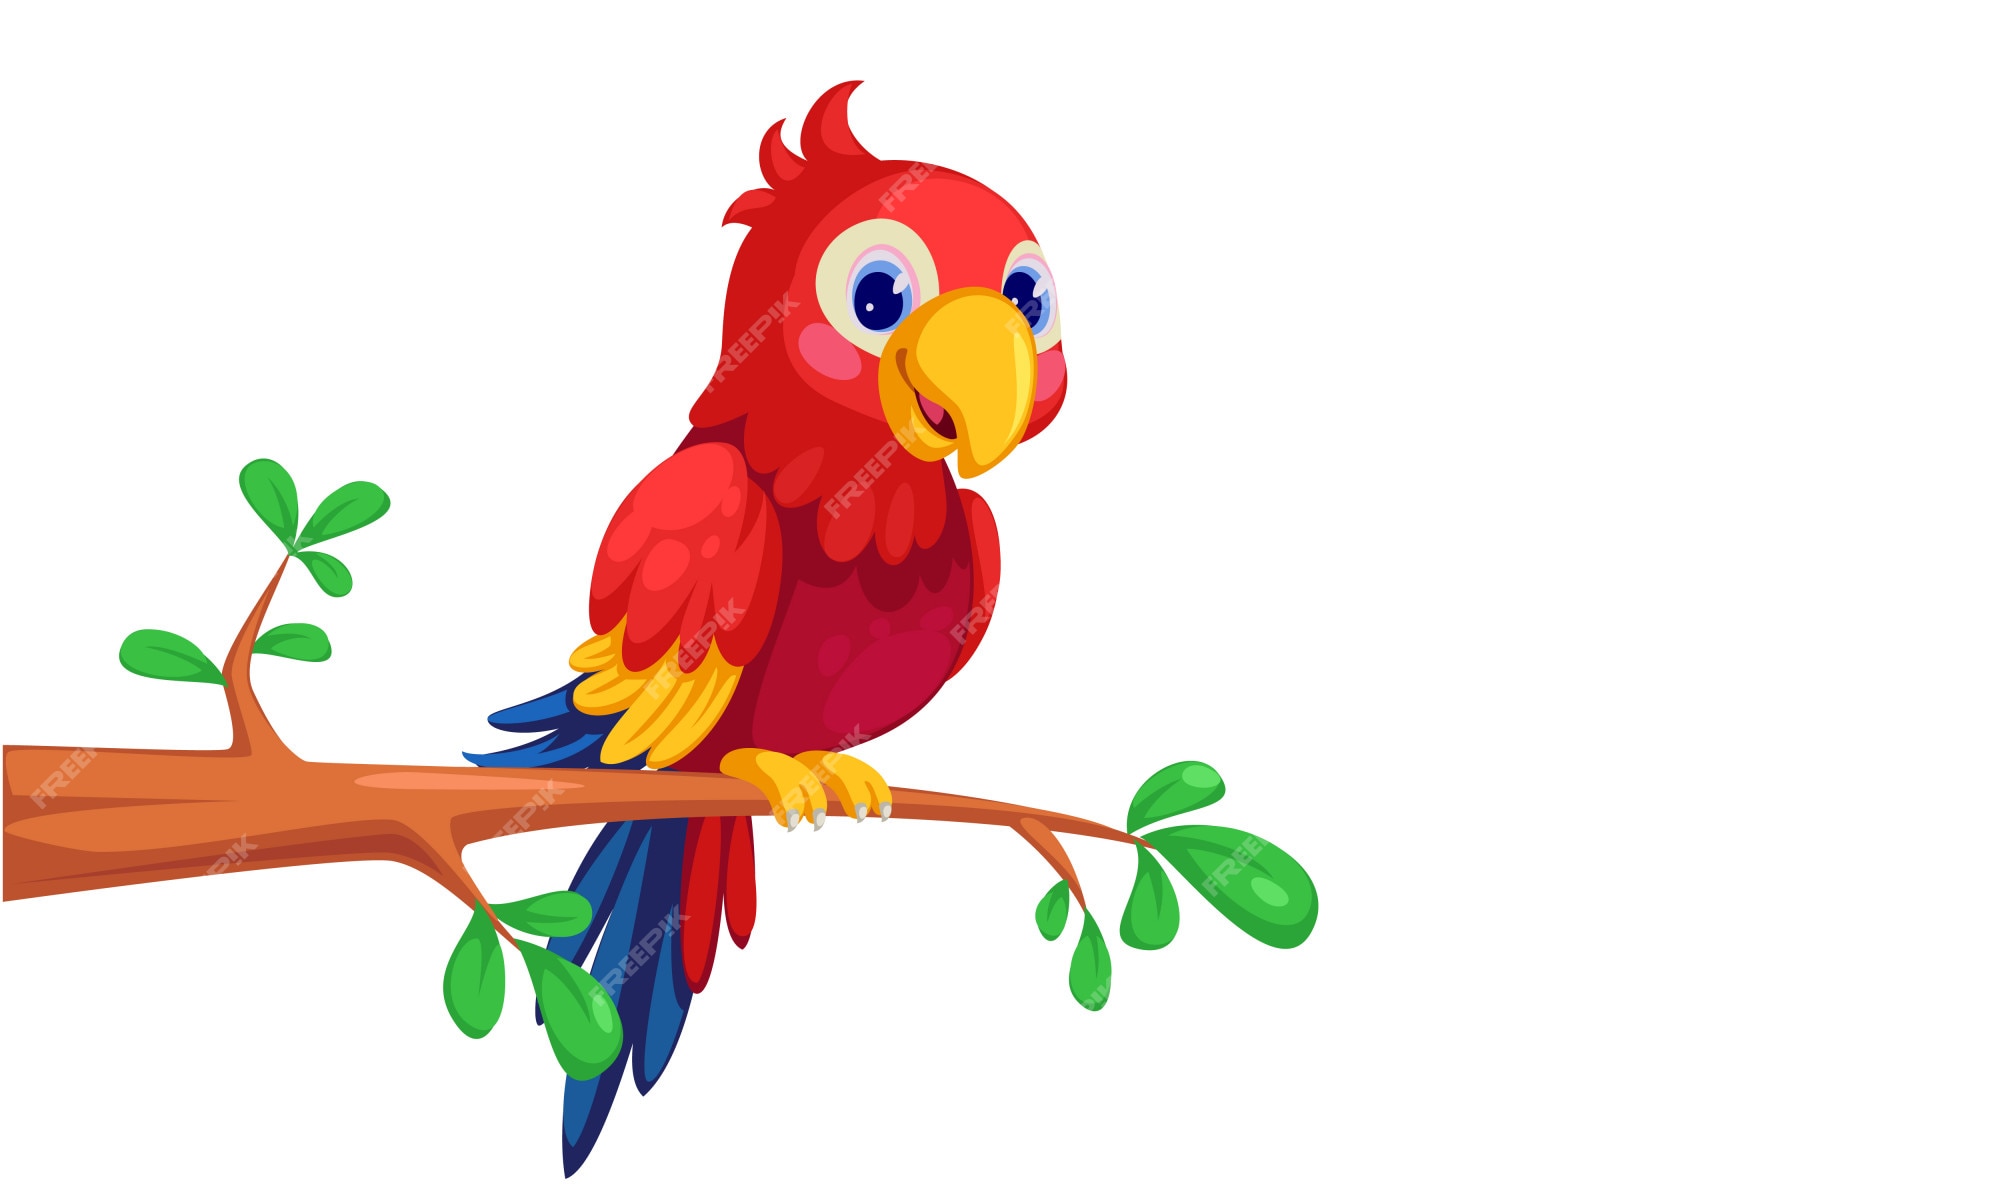 Parrot Cartoon Images - Free Download on Freepik